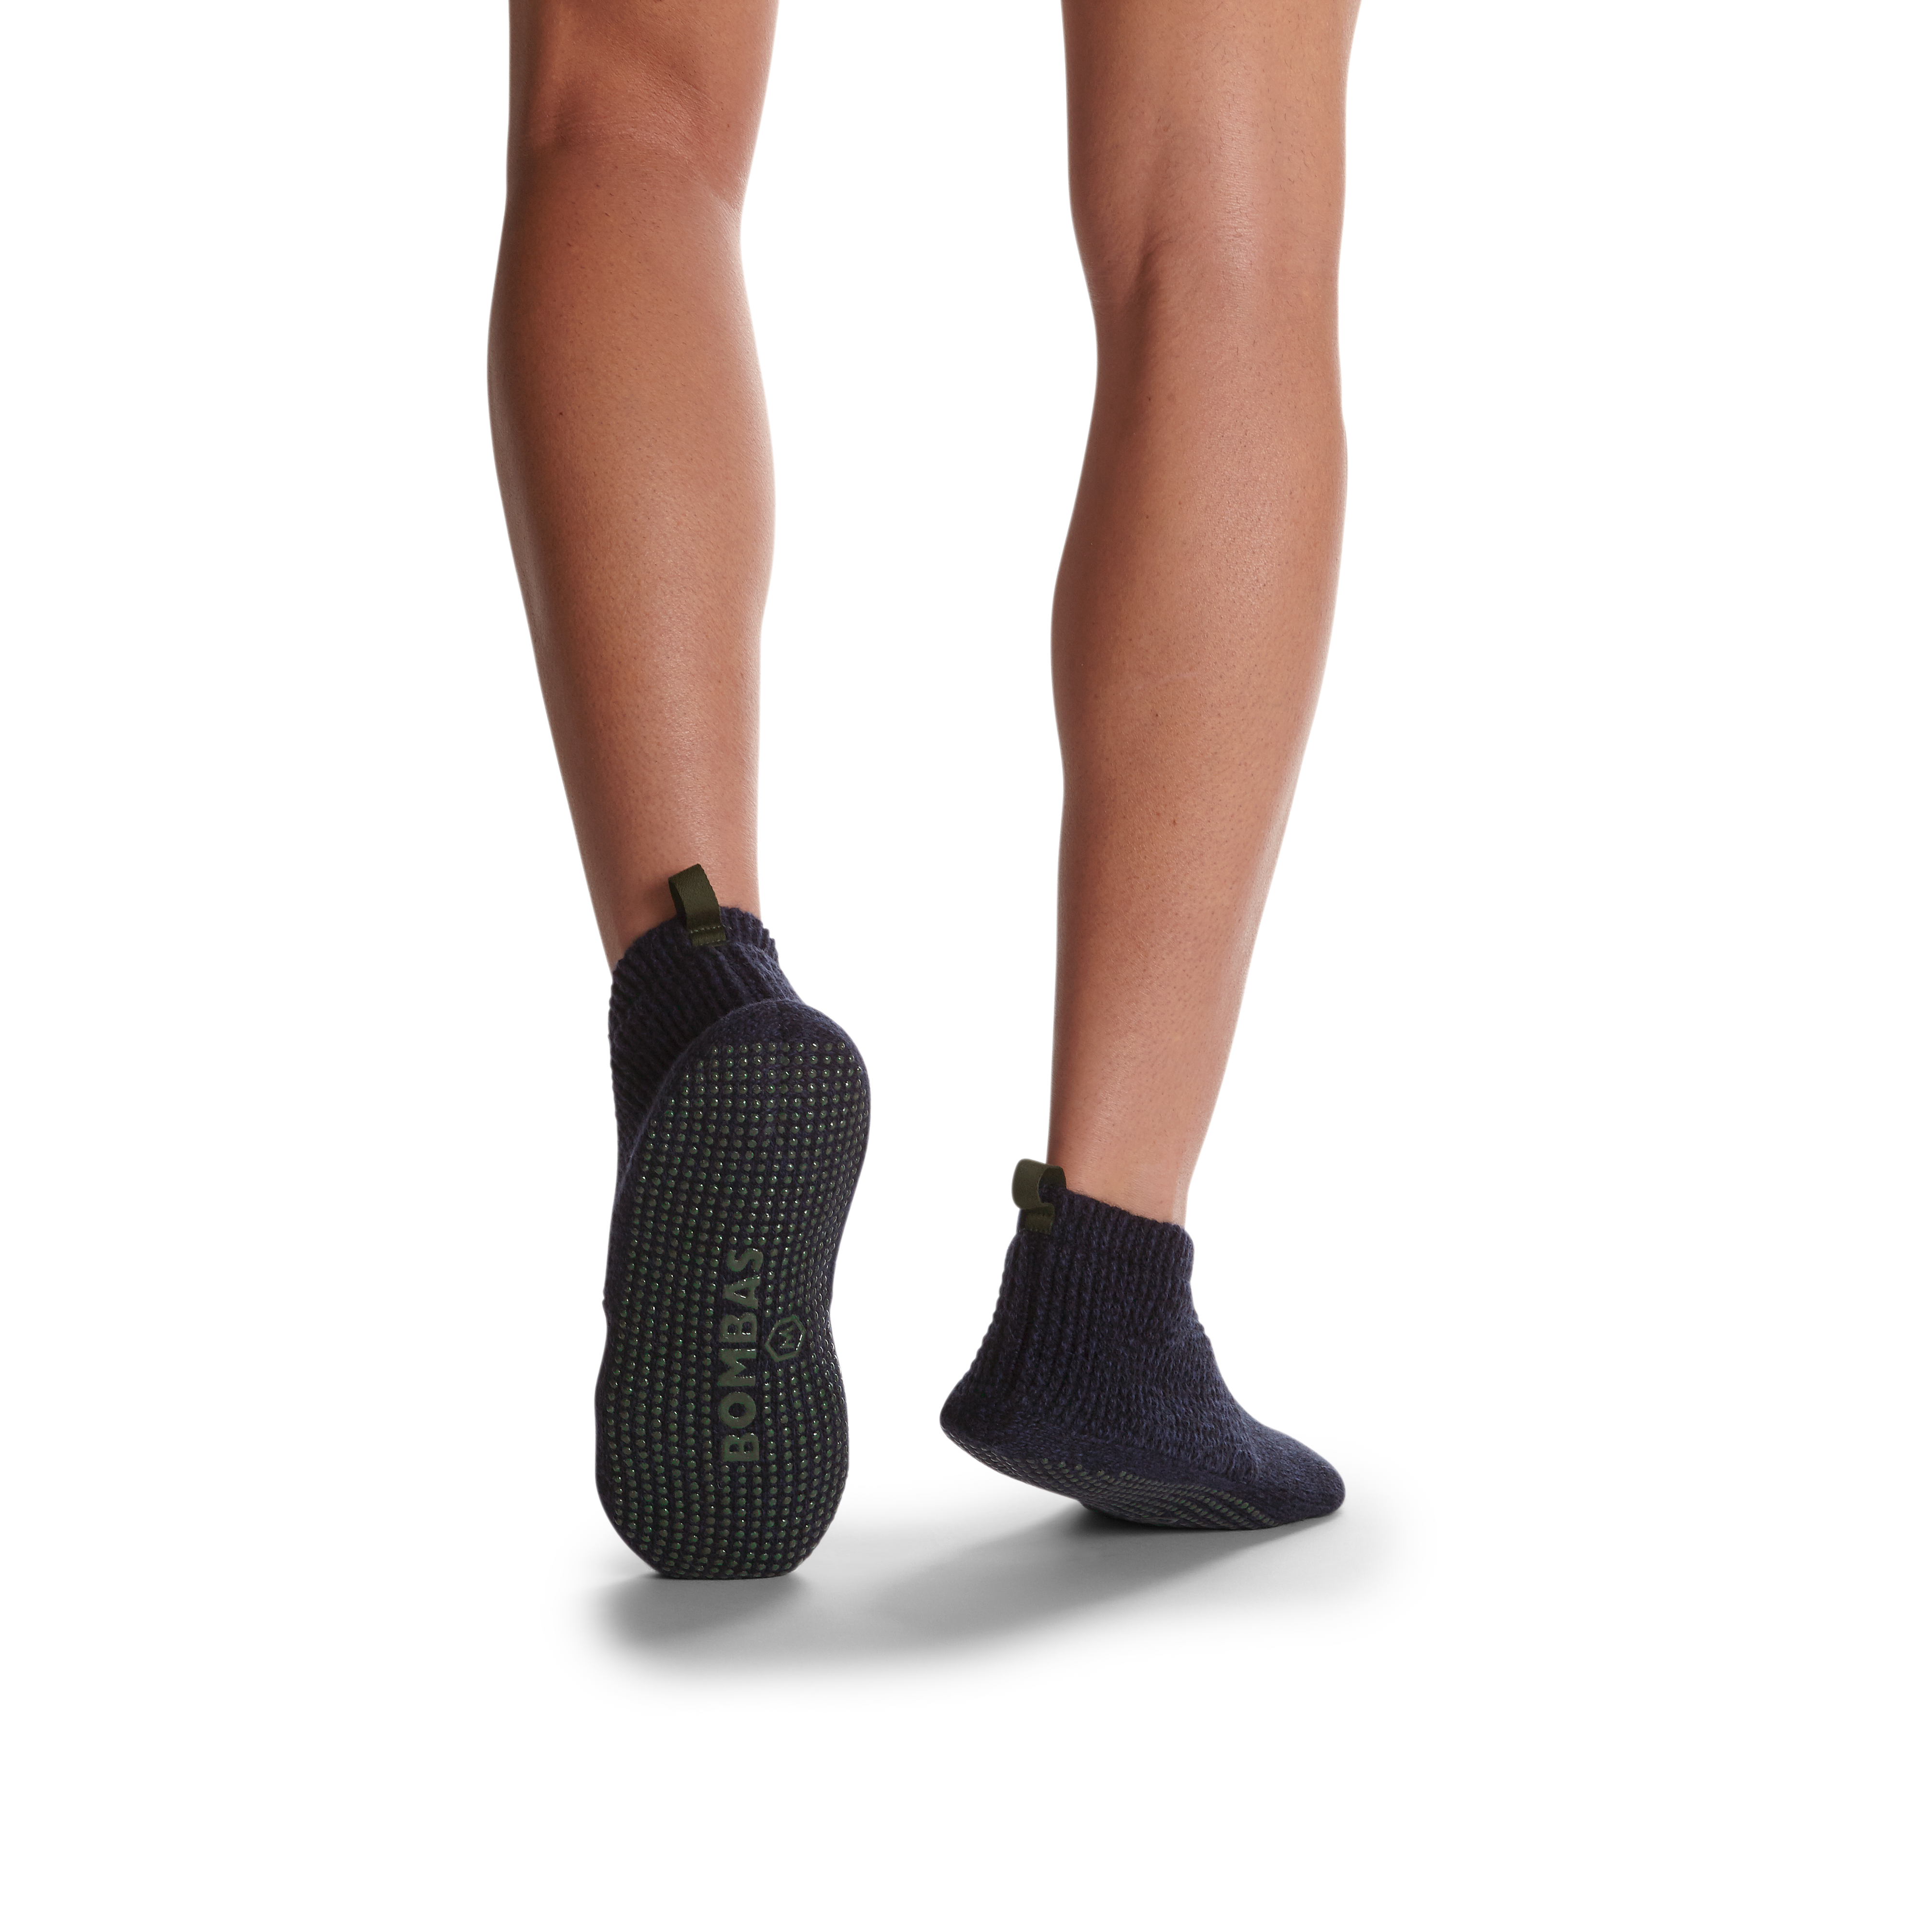 AYYUFE Women Fashion Pure Color Breathable Non-Slip Soft Gripper Slippers  Floor Socks 